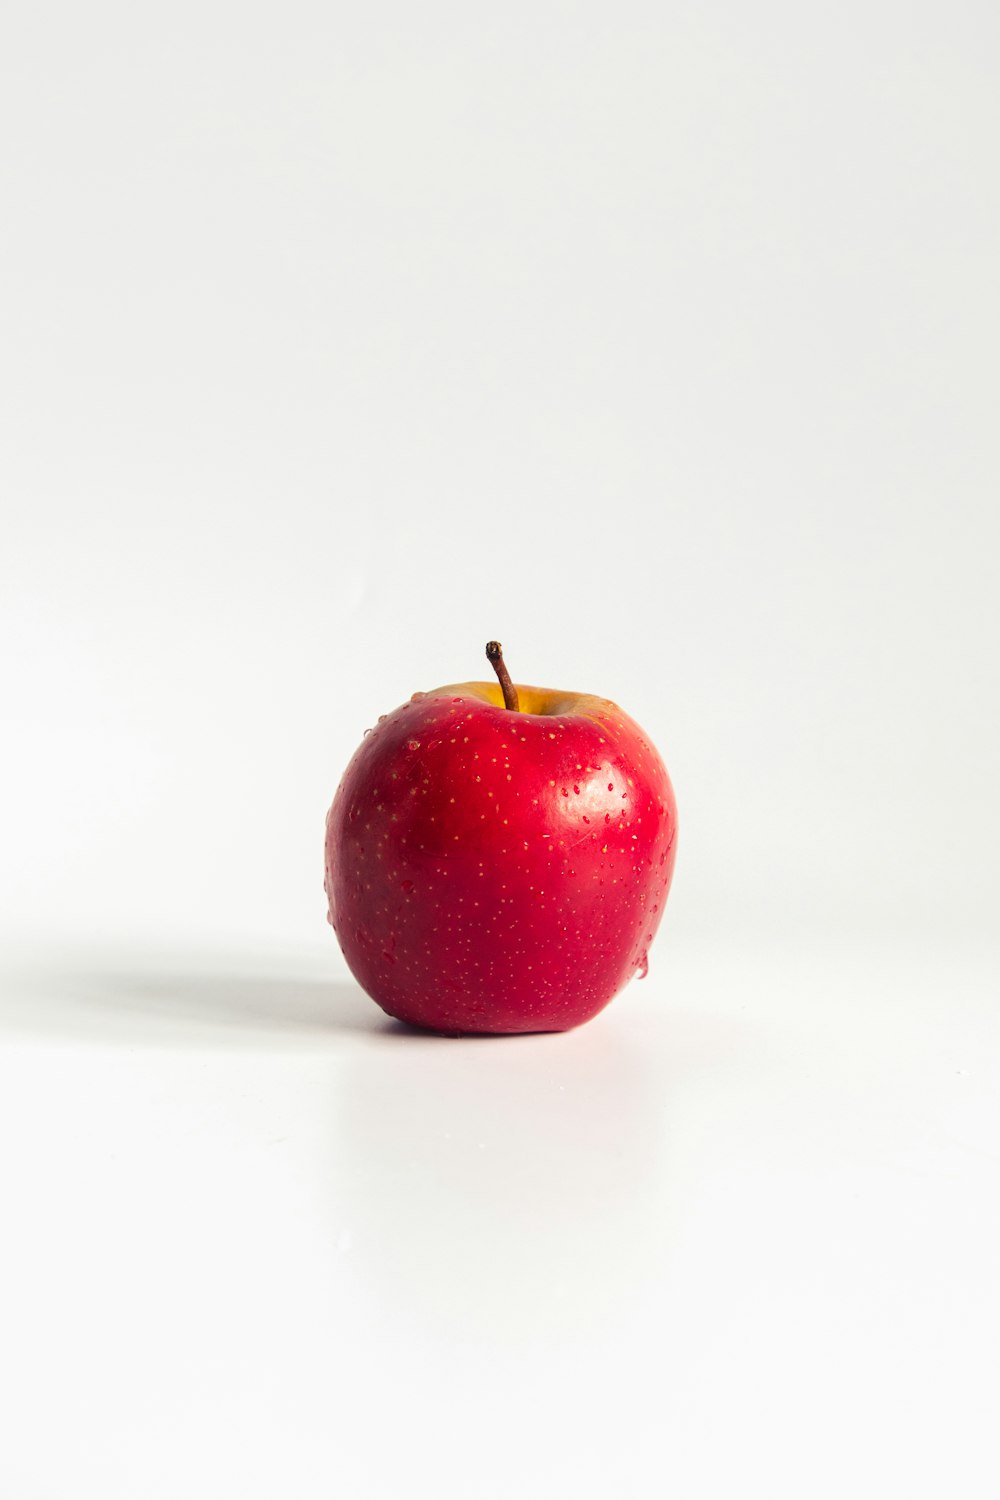 mela rossa su superficie bianca